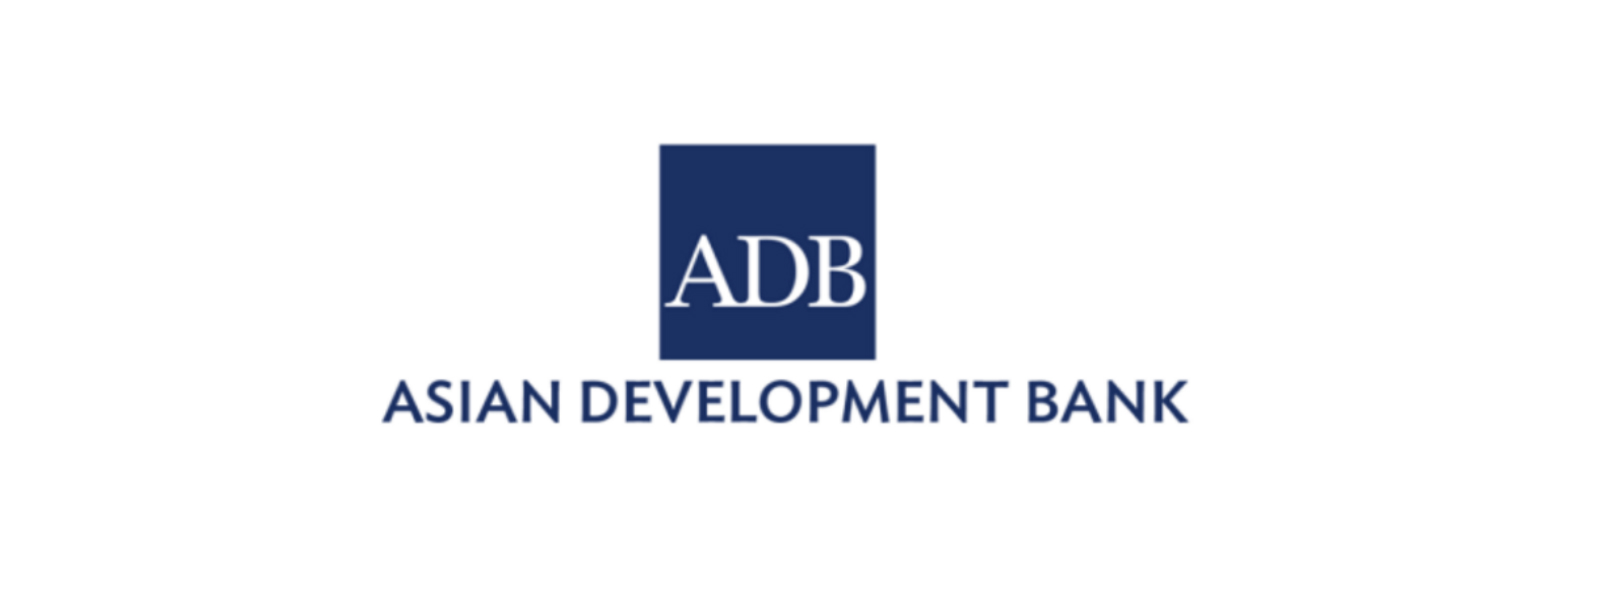 SL requires funding of US$ 4.92 billion : ADB